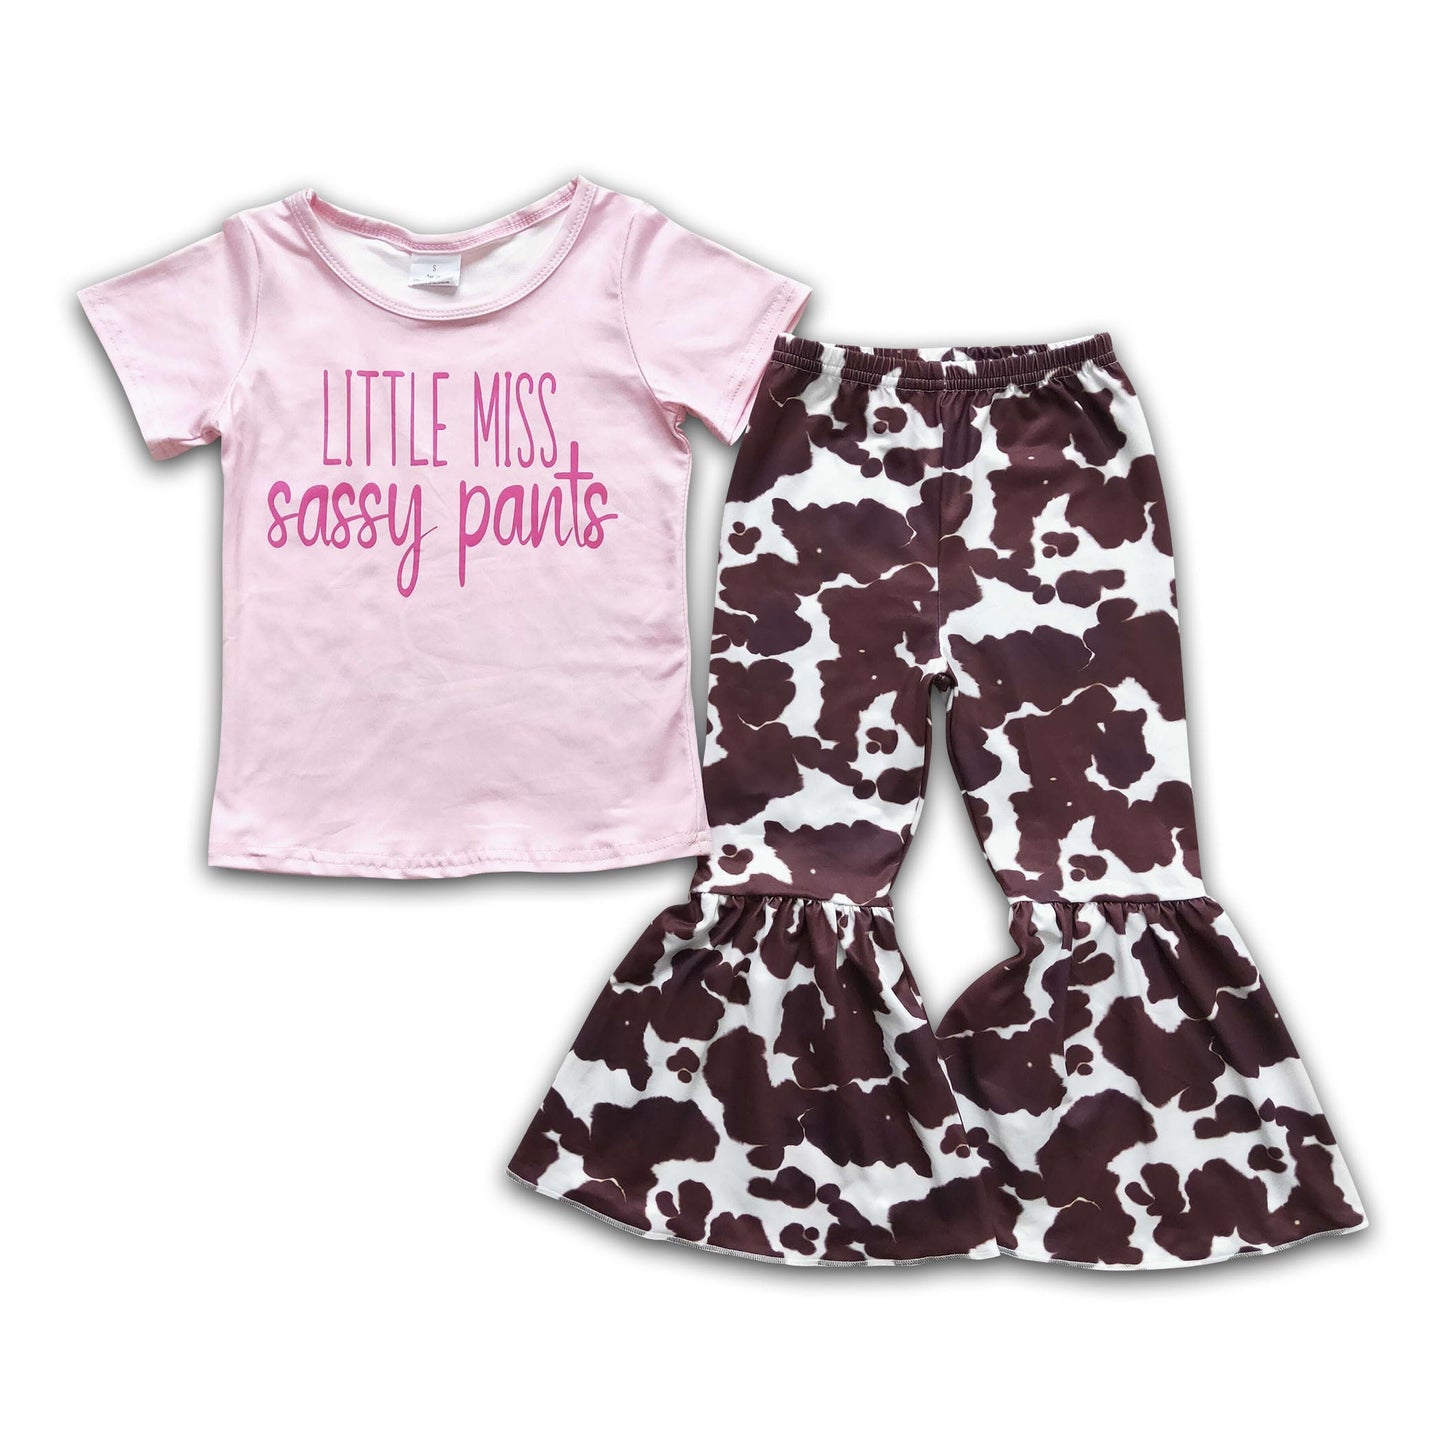 Little miss sassy pants pink shirt leopard pants girls clothing set